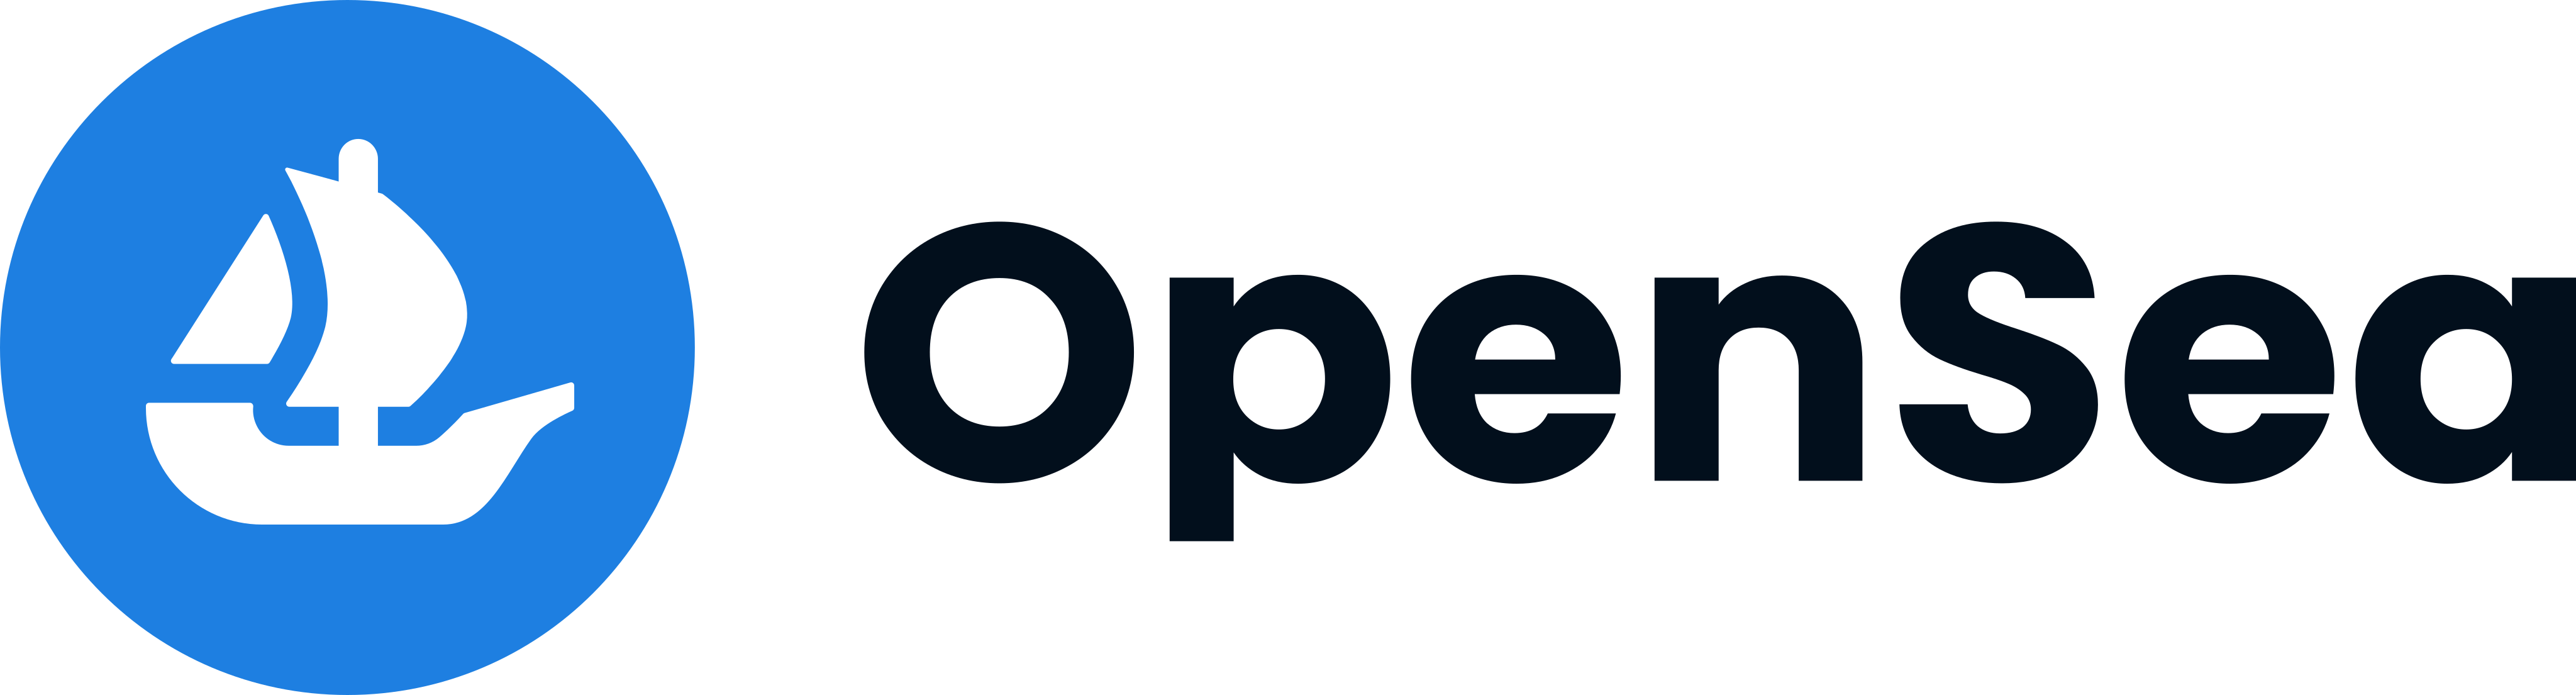 opensea logo - OpenSea Logo